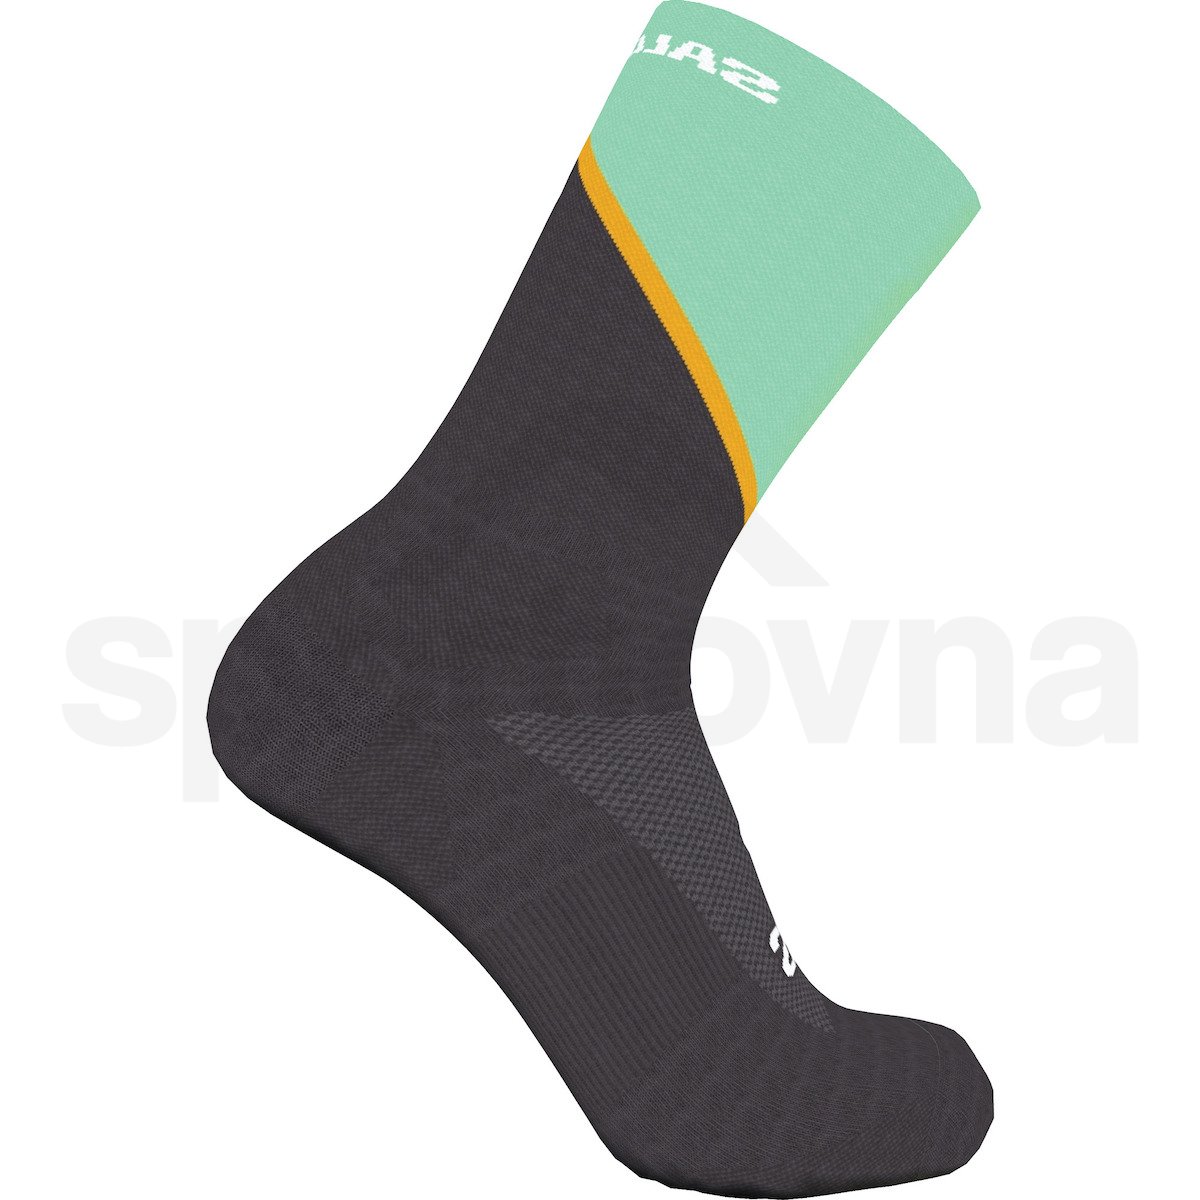 Ponožky Salomon Pulse Crew - modrá/žlutá/černá